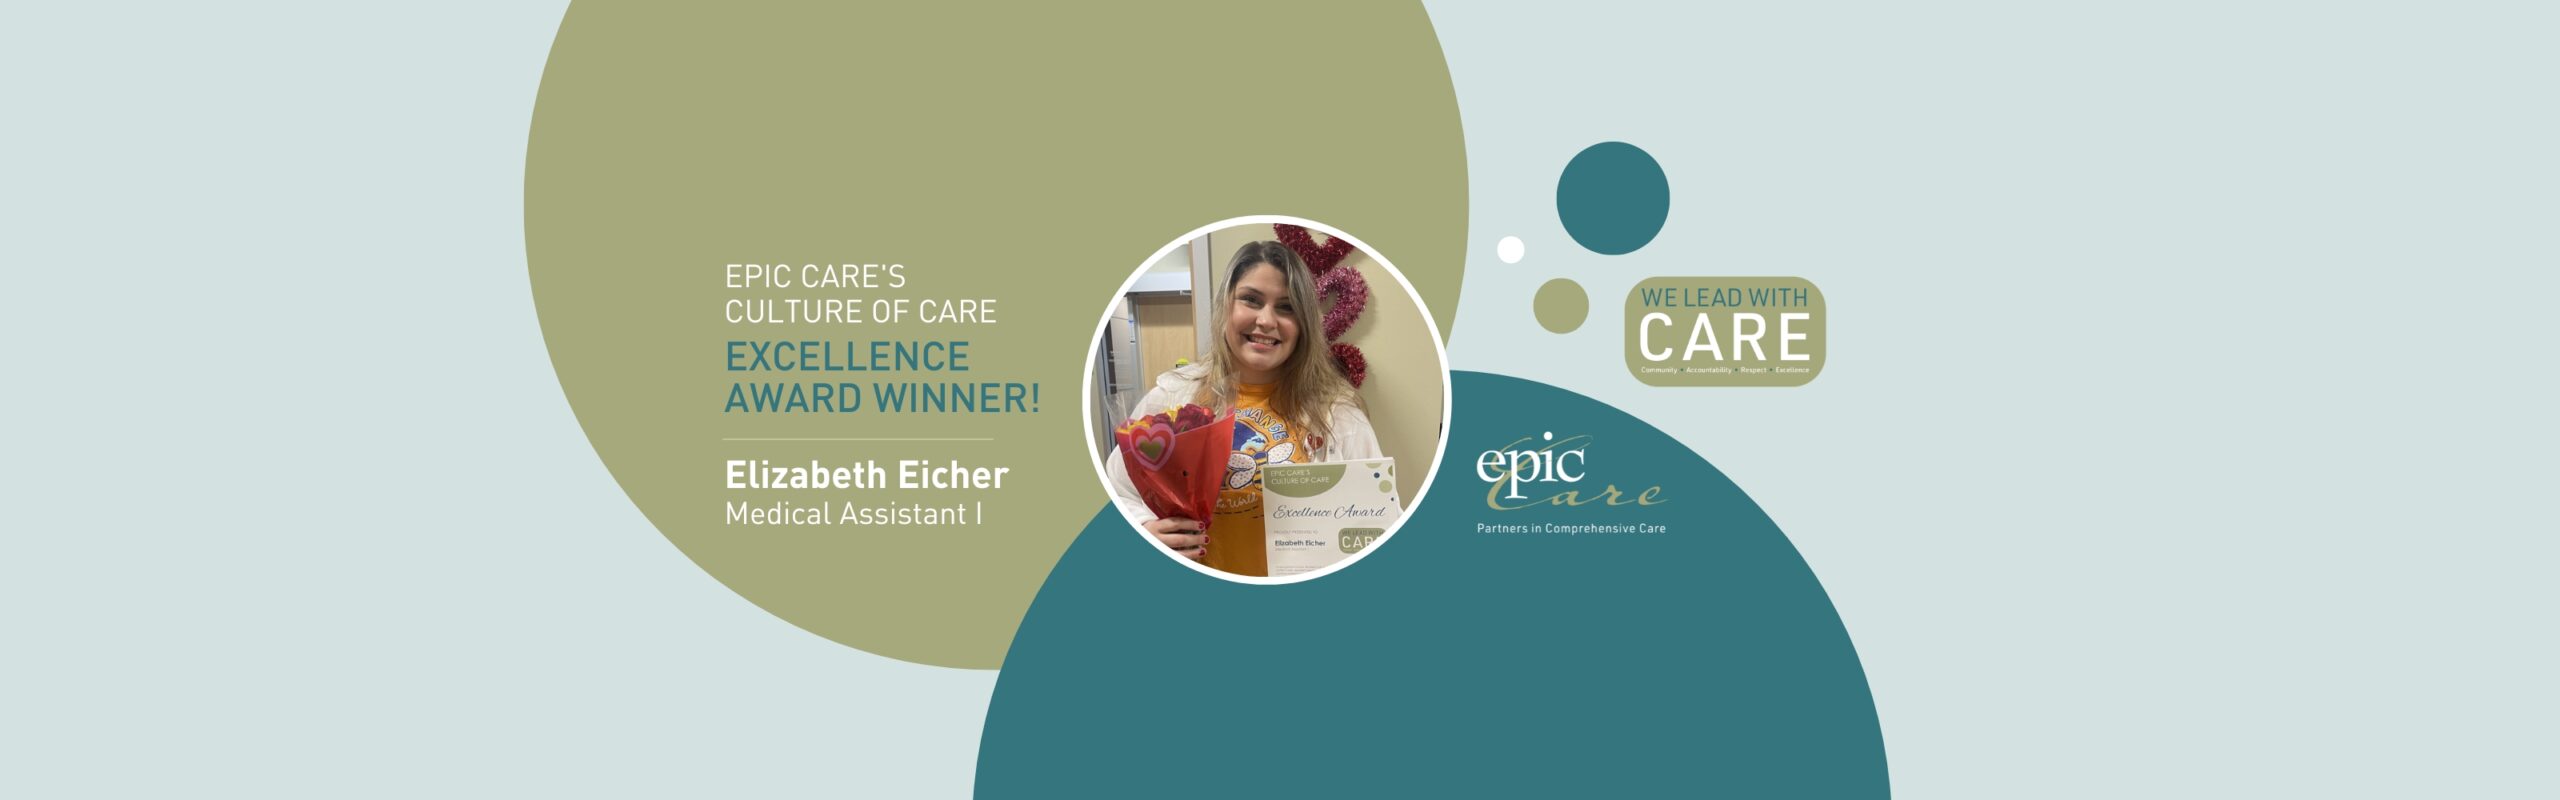 Epic Care’s Culture of CARE Excellence Award Winner! – Elizabeth Eicher